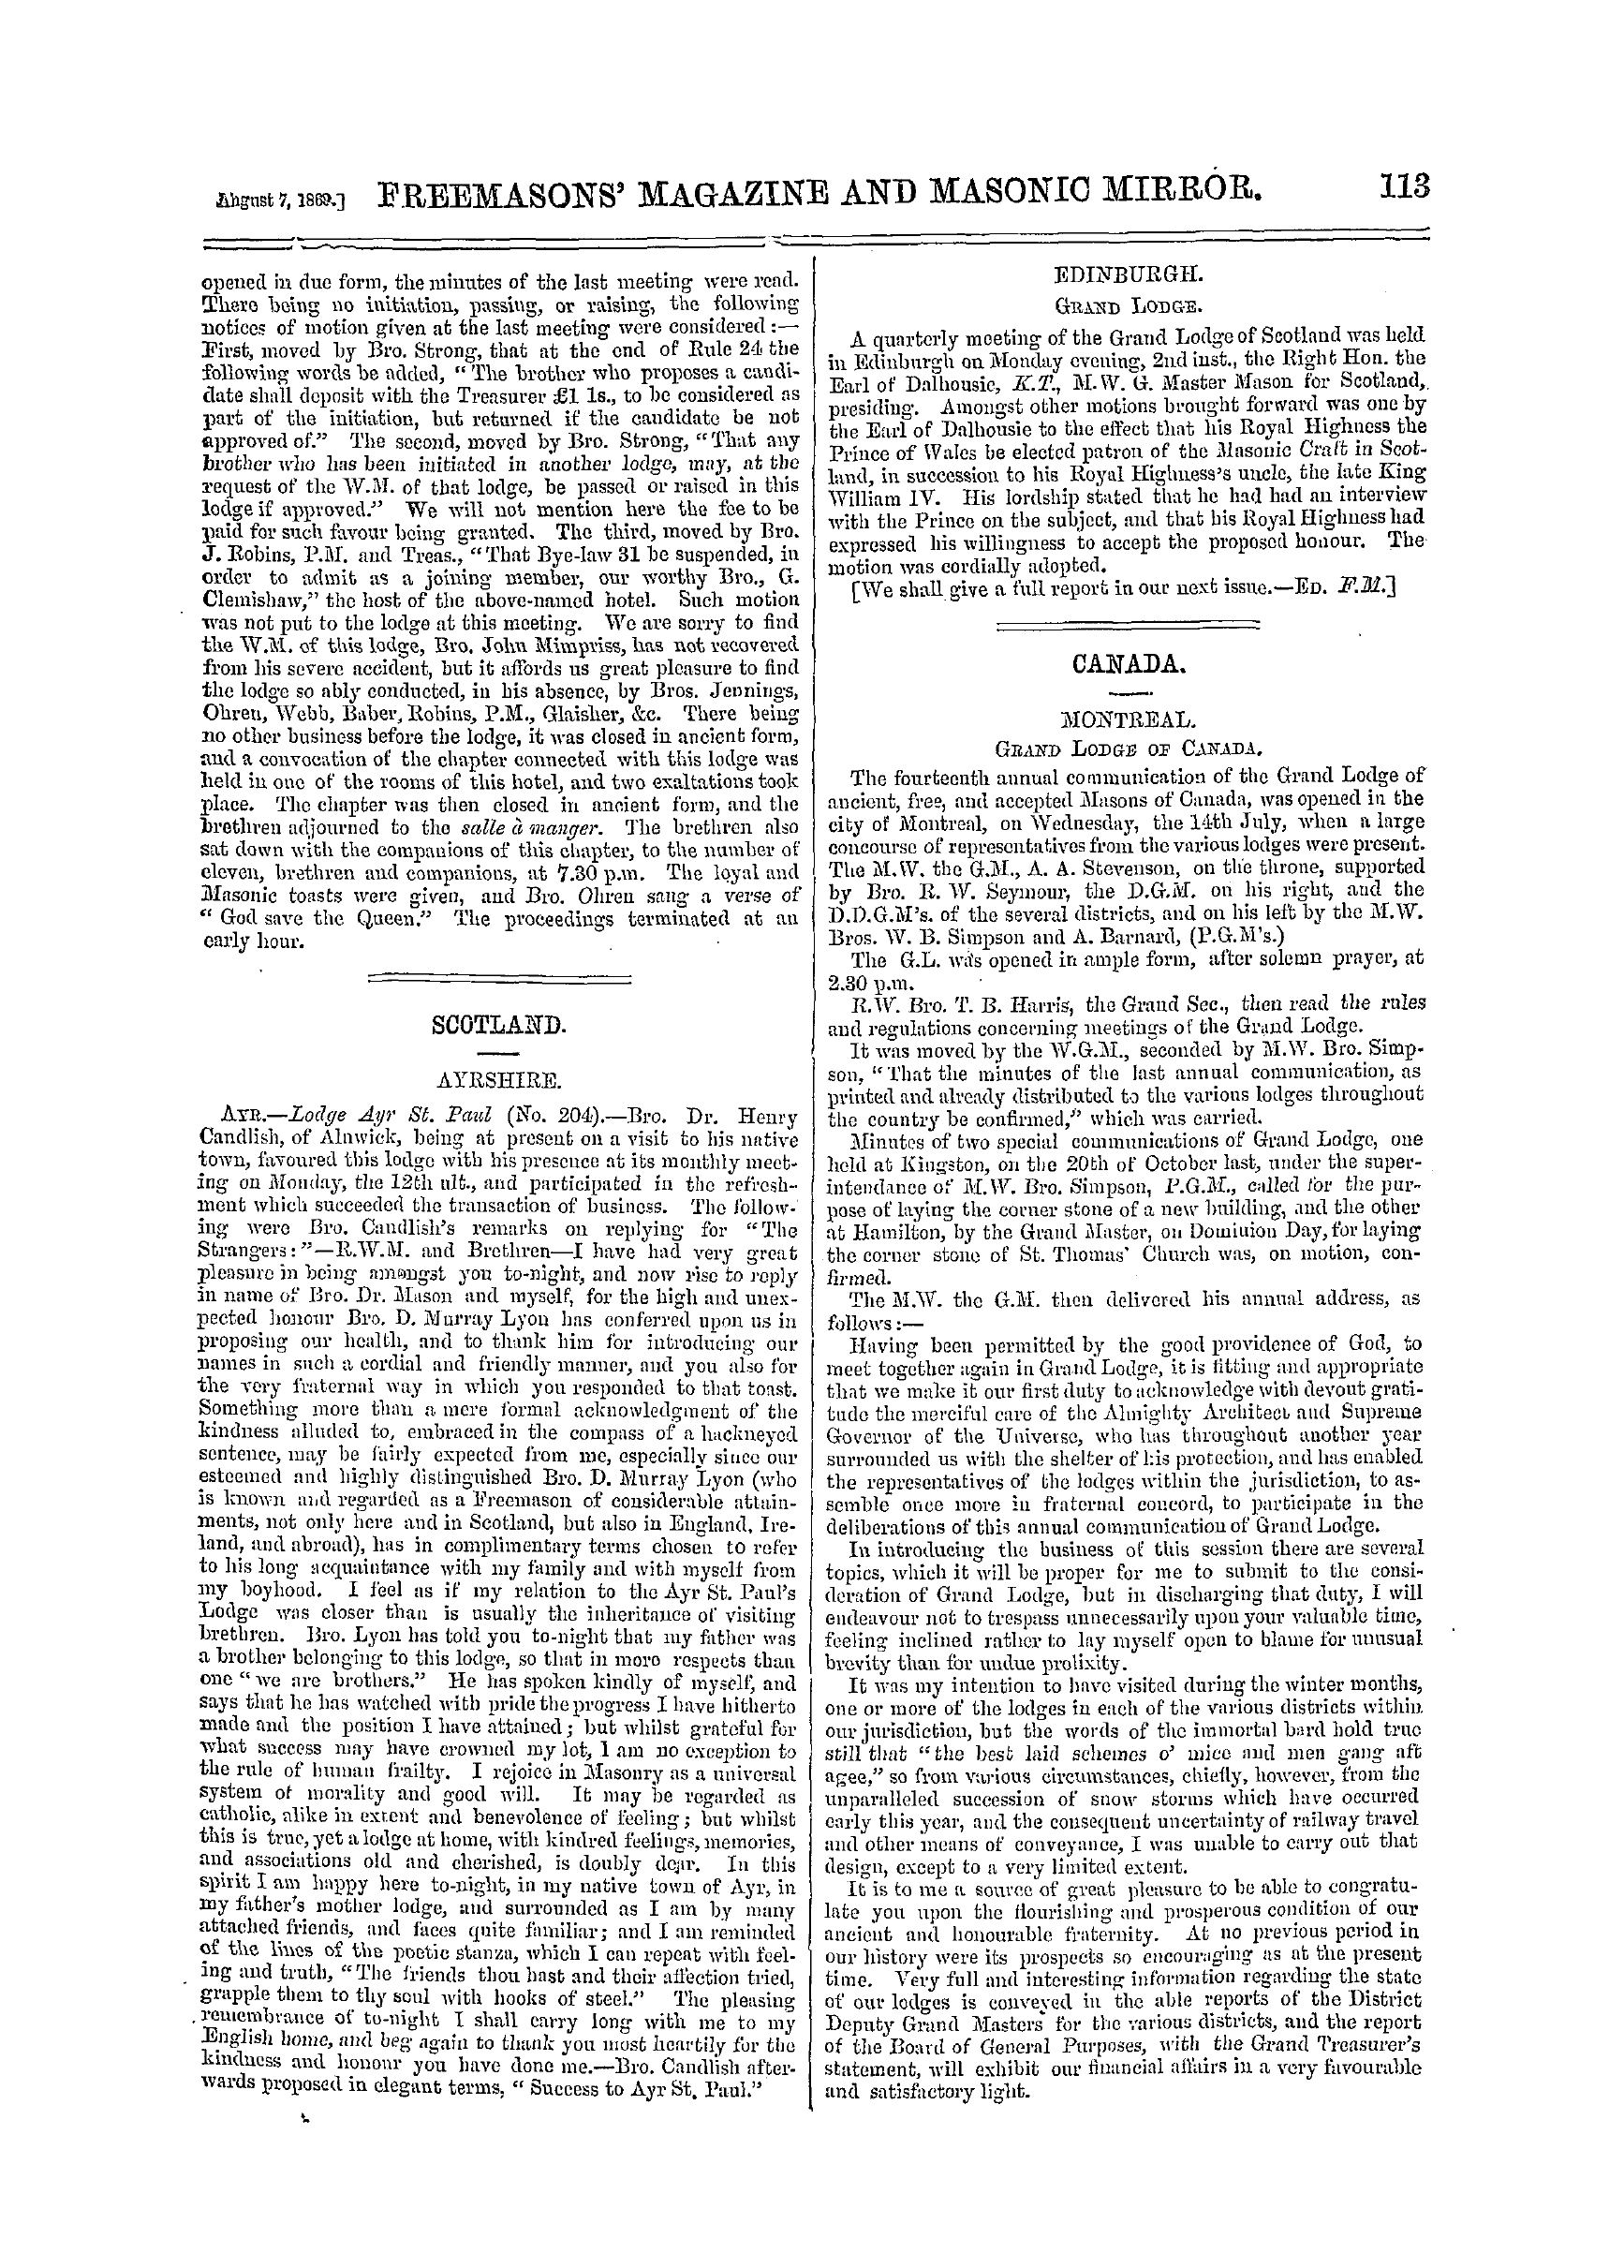 The Freemasons' Monthly Magazine: 1869-08-07 - Edinburgh.